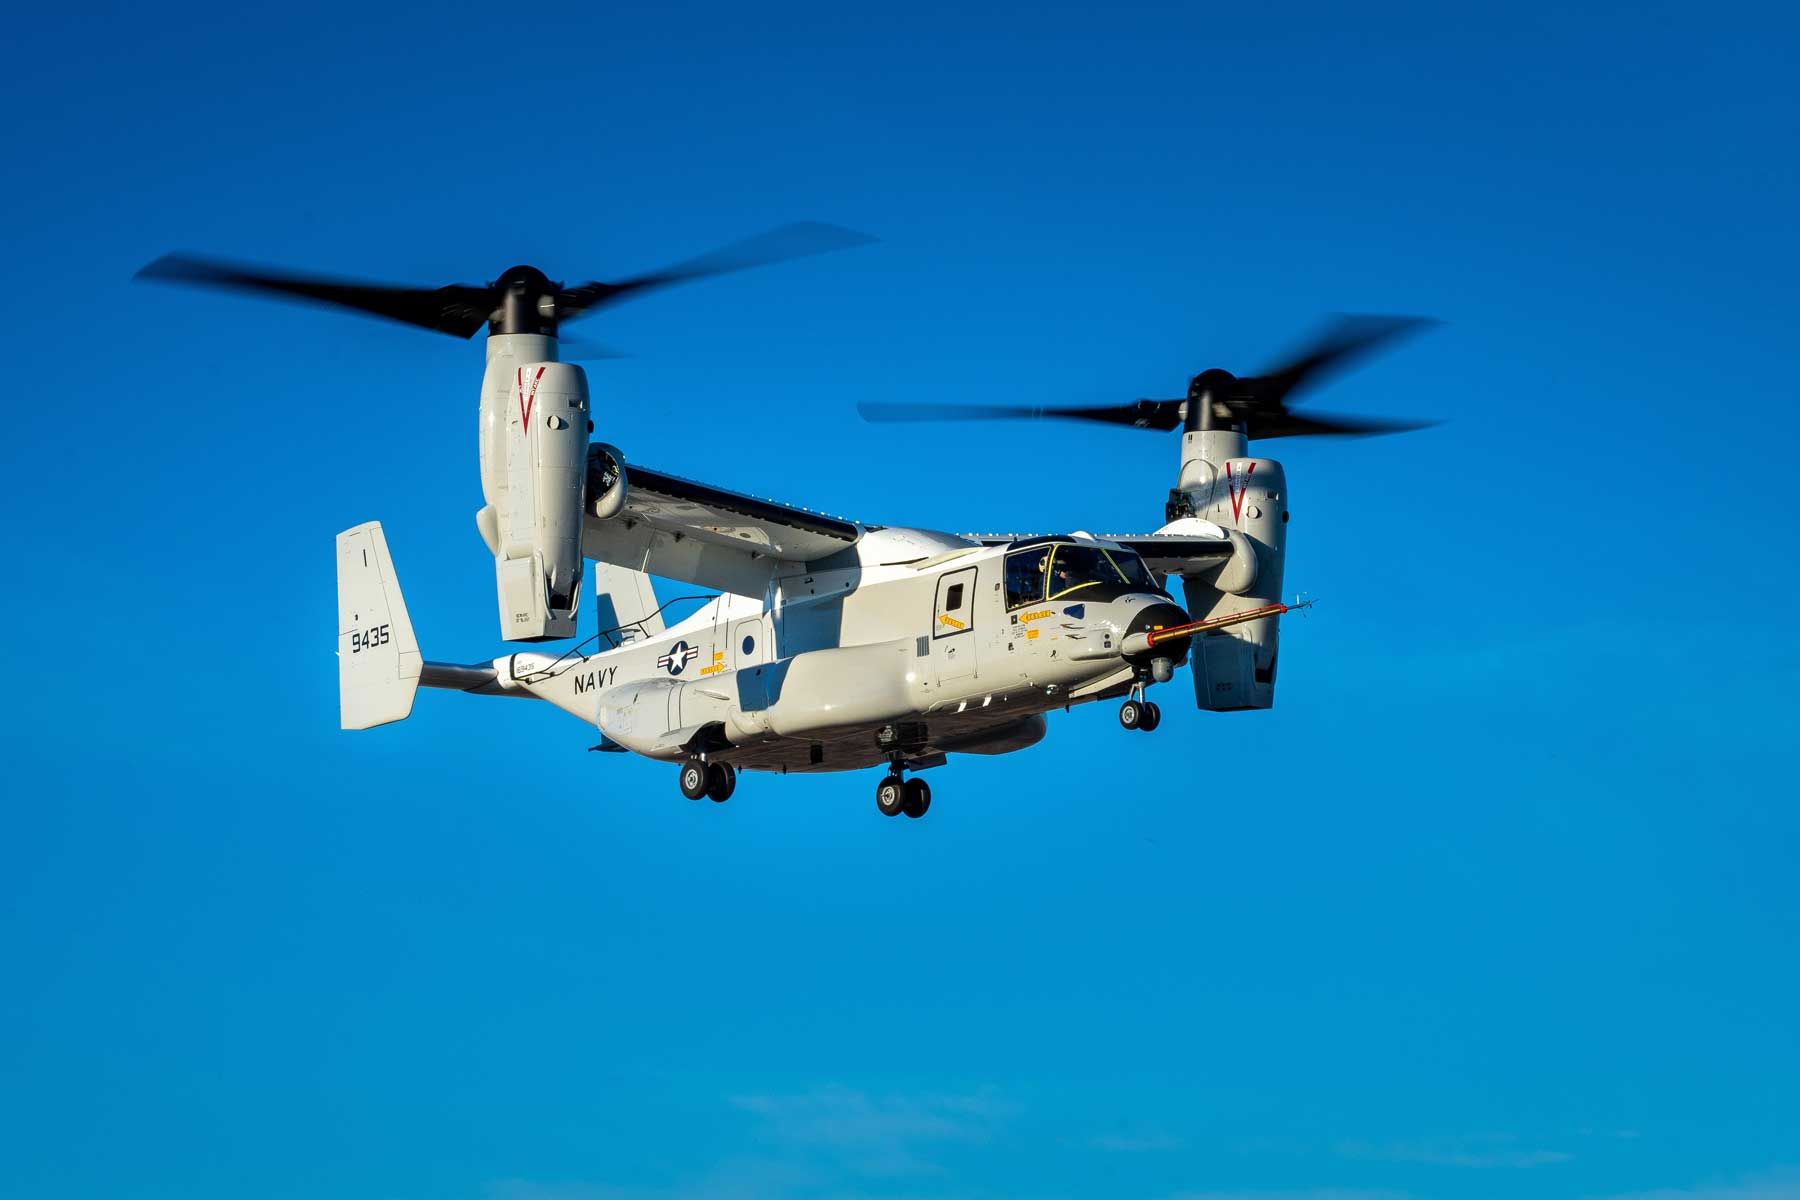 V-22 Osprey military craft in flight